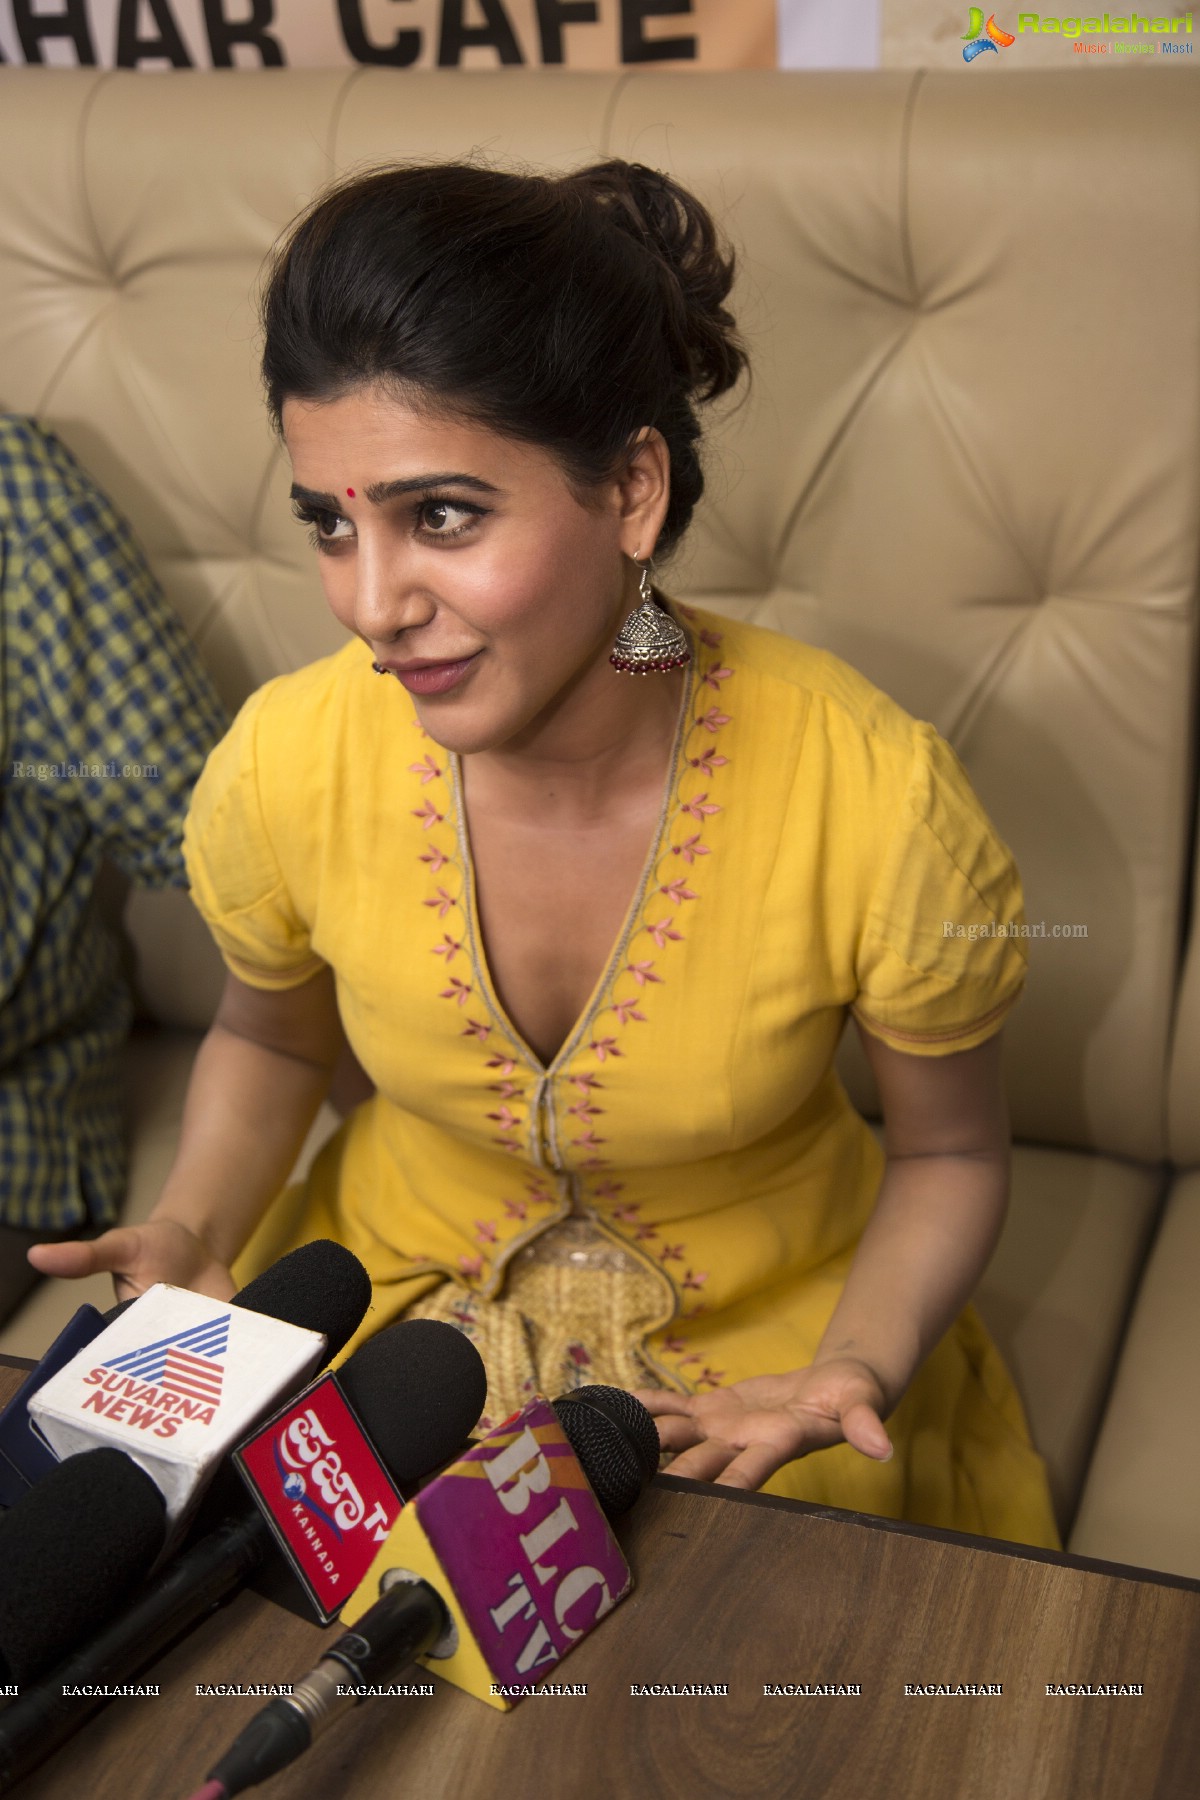 Samantha launches Bahar Cafe, Marathahalli, Bengaluru